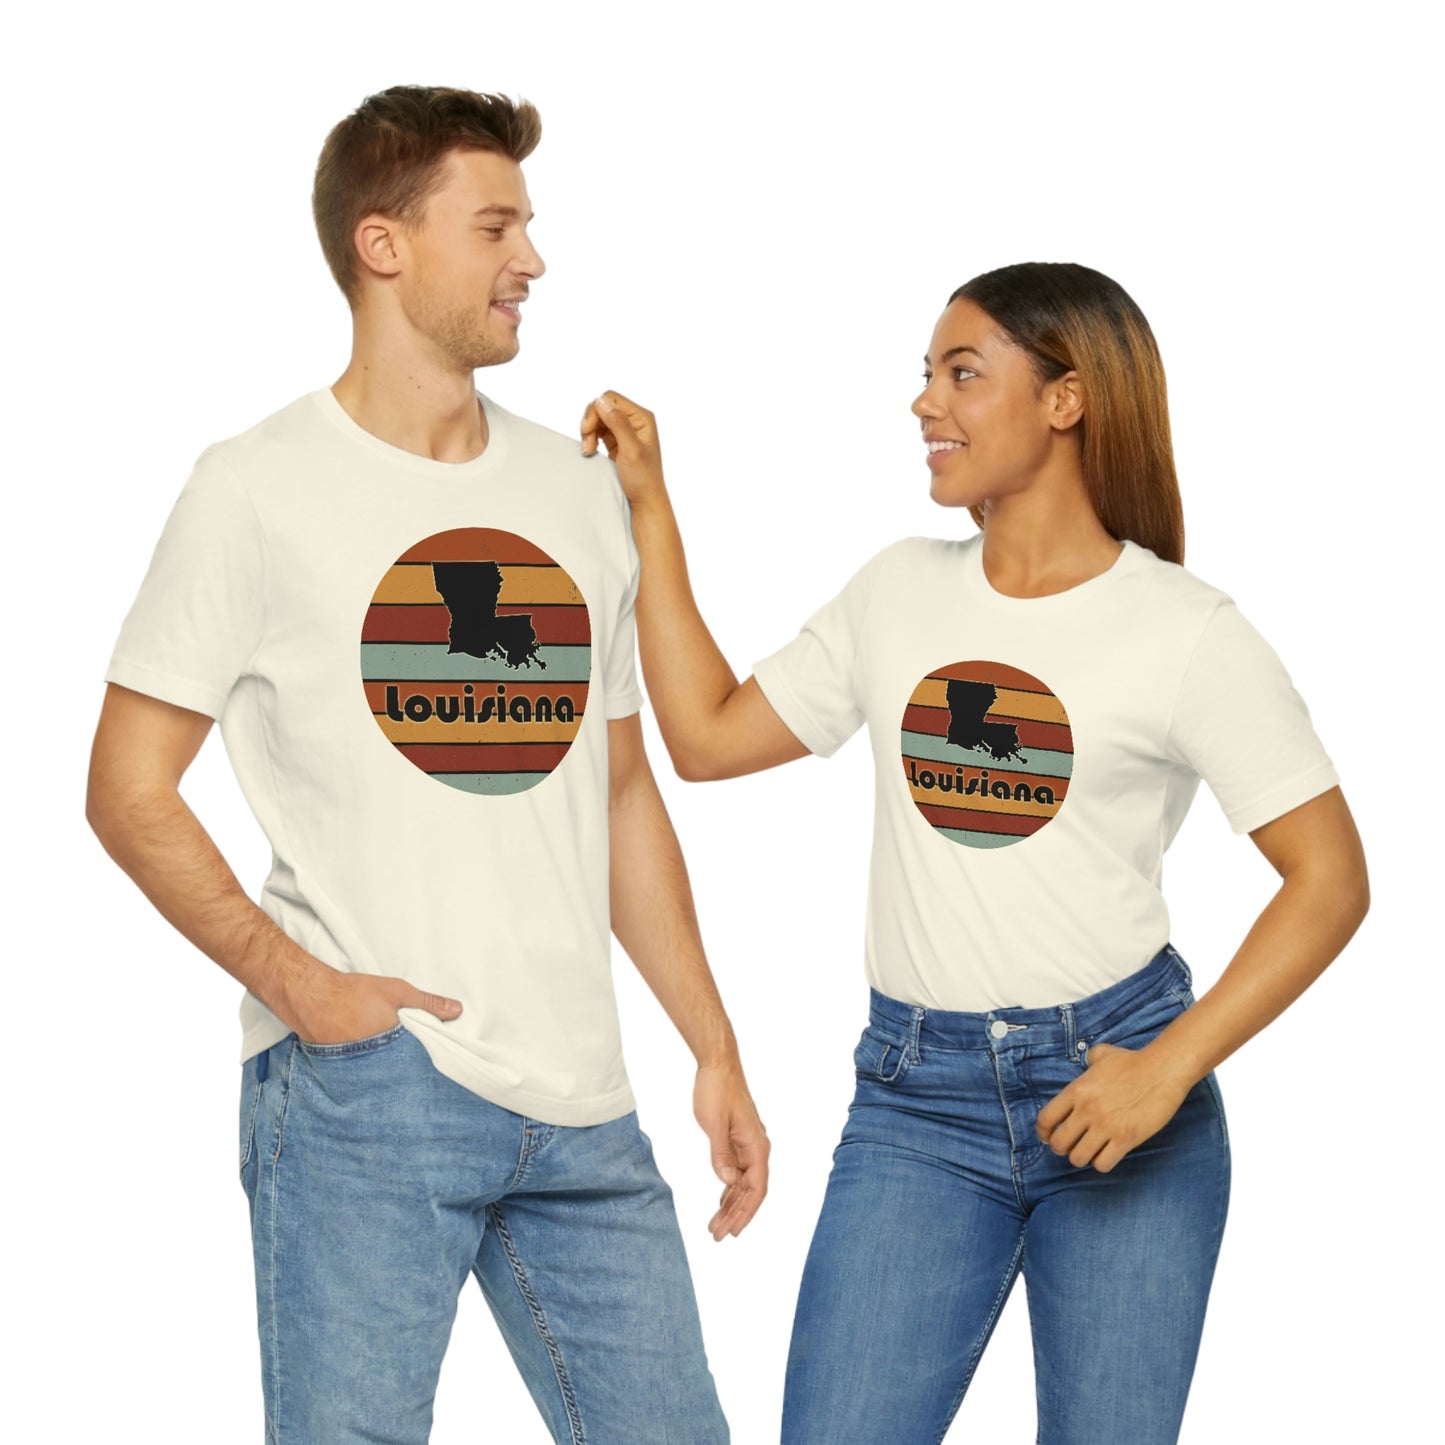 Louisiana Retro Sunset Short Sleeve T-shirt